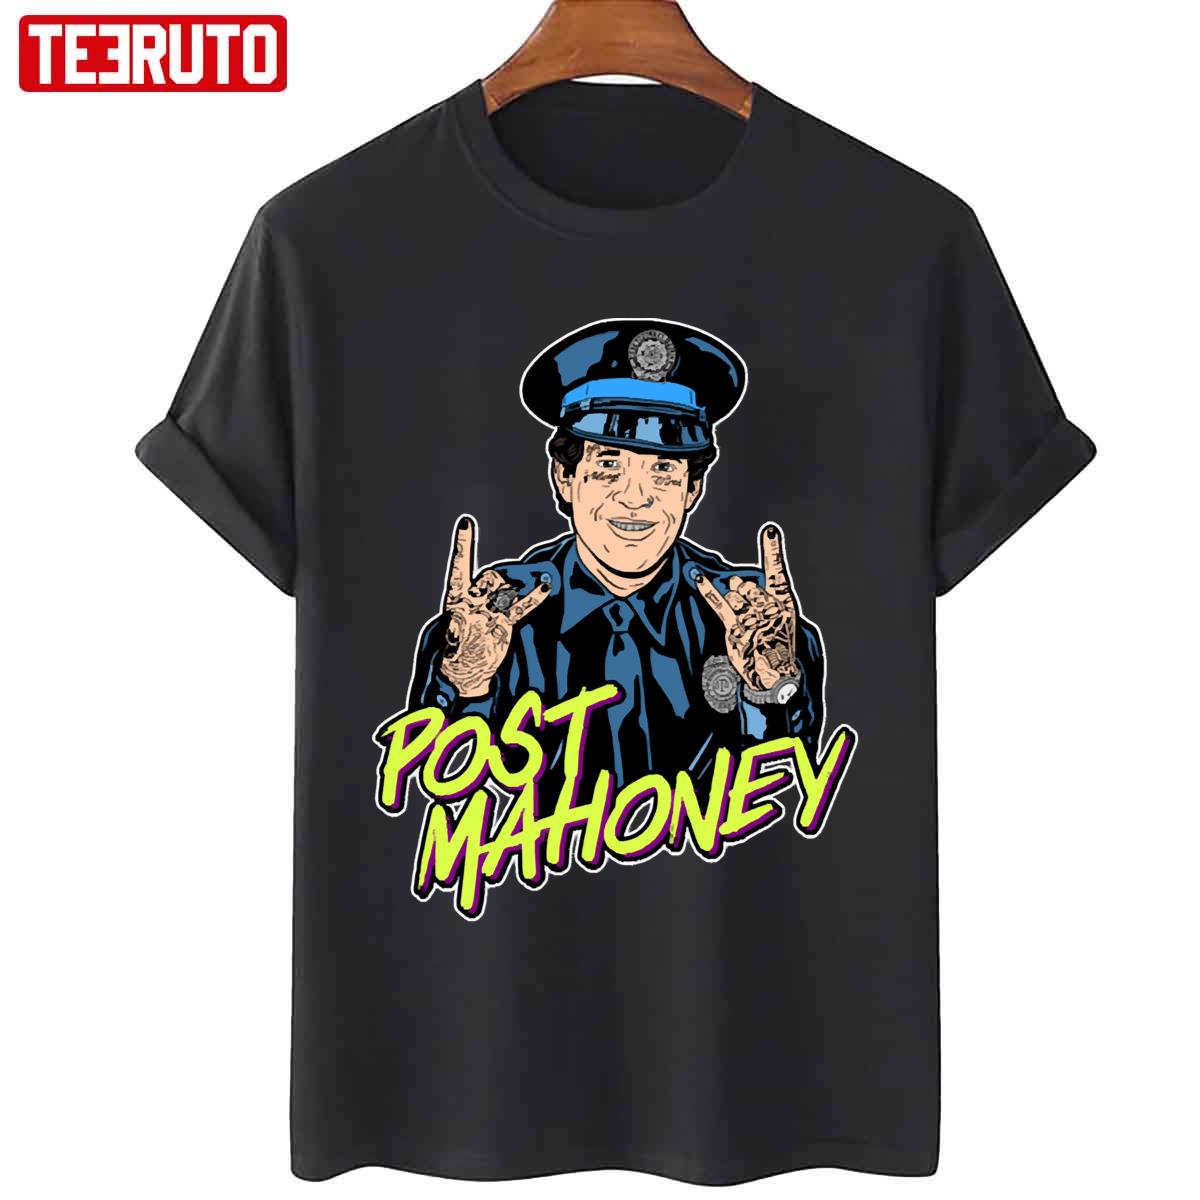 Post Mahoney Funny Cop Post Malone Unisex T-Shirt